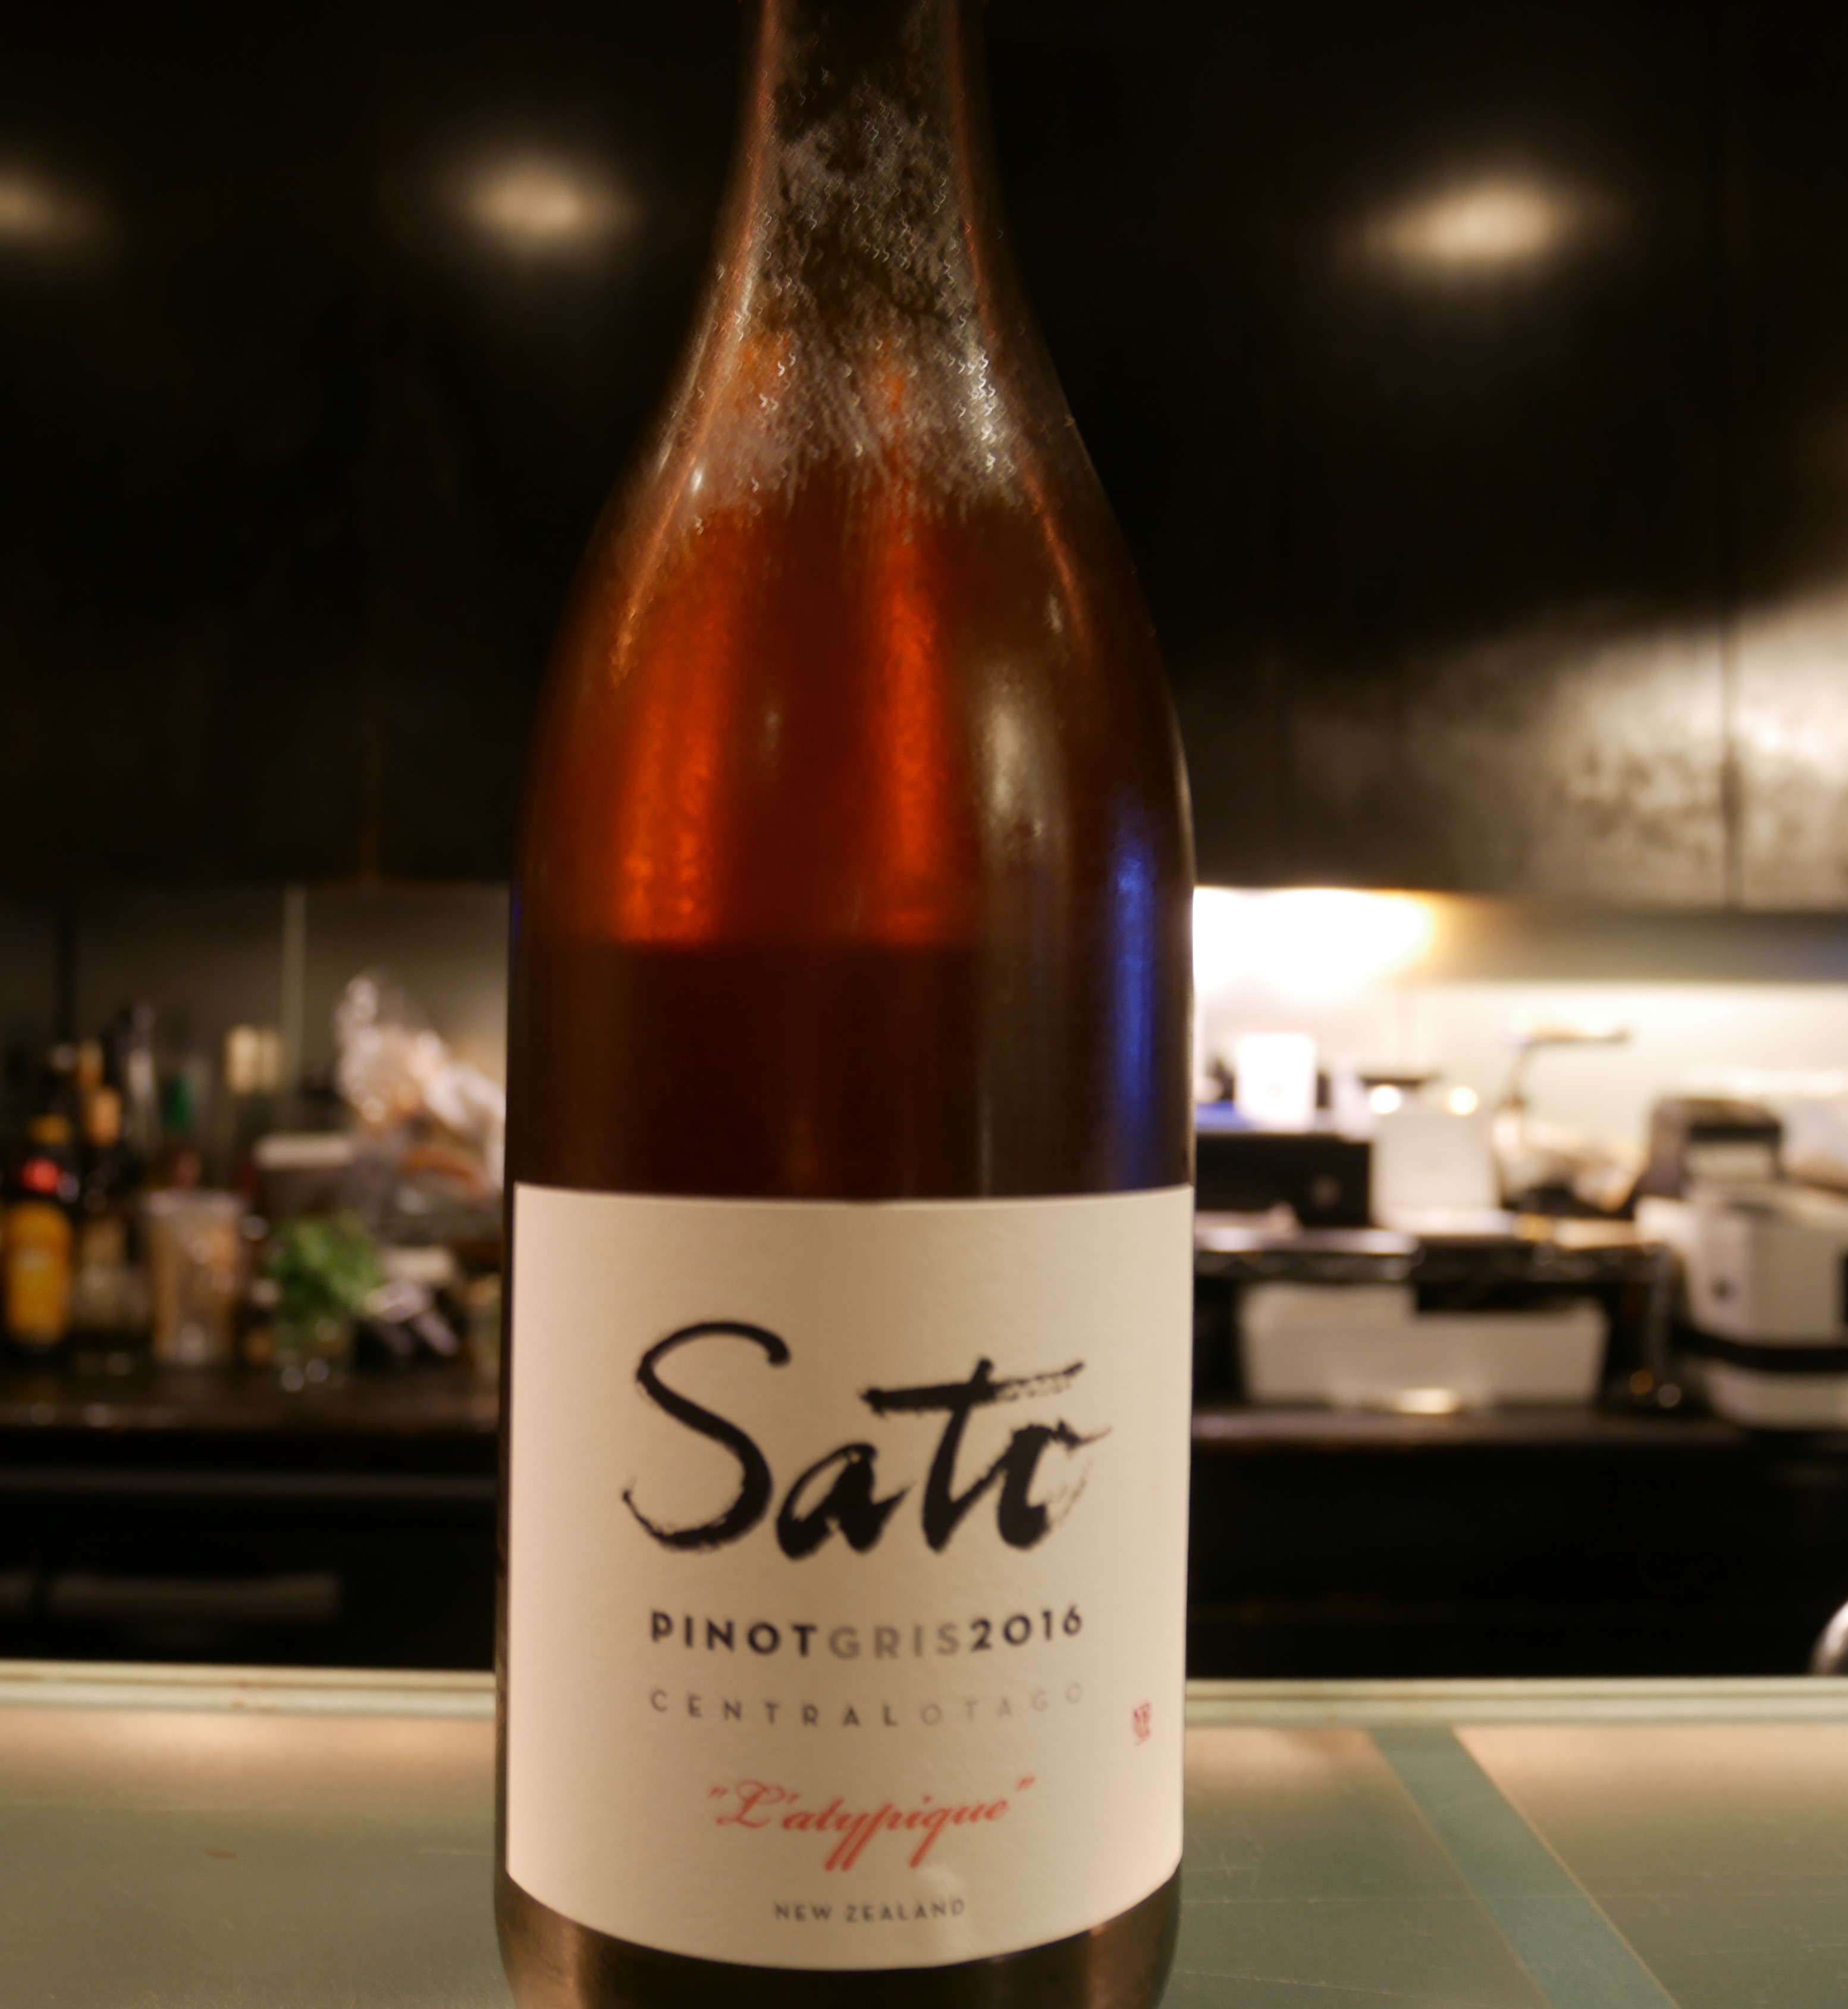 Sato Pinot Gris “L’atypique” オレンジワイン入荷　限定6本